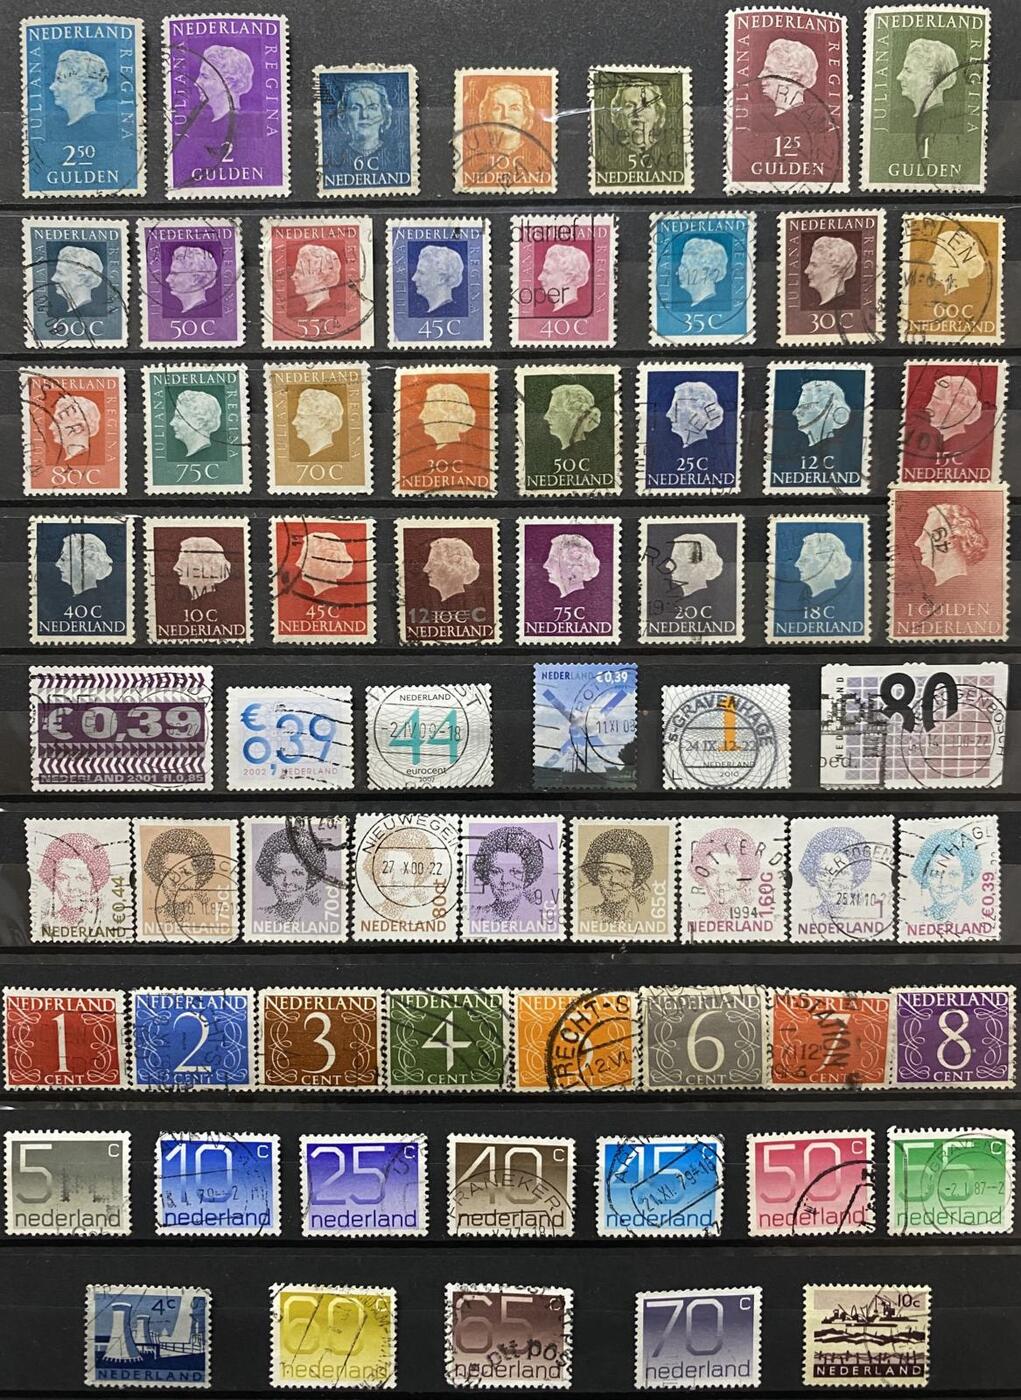 марки в санкт петербург